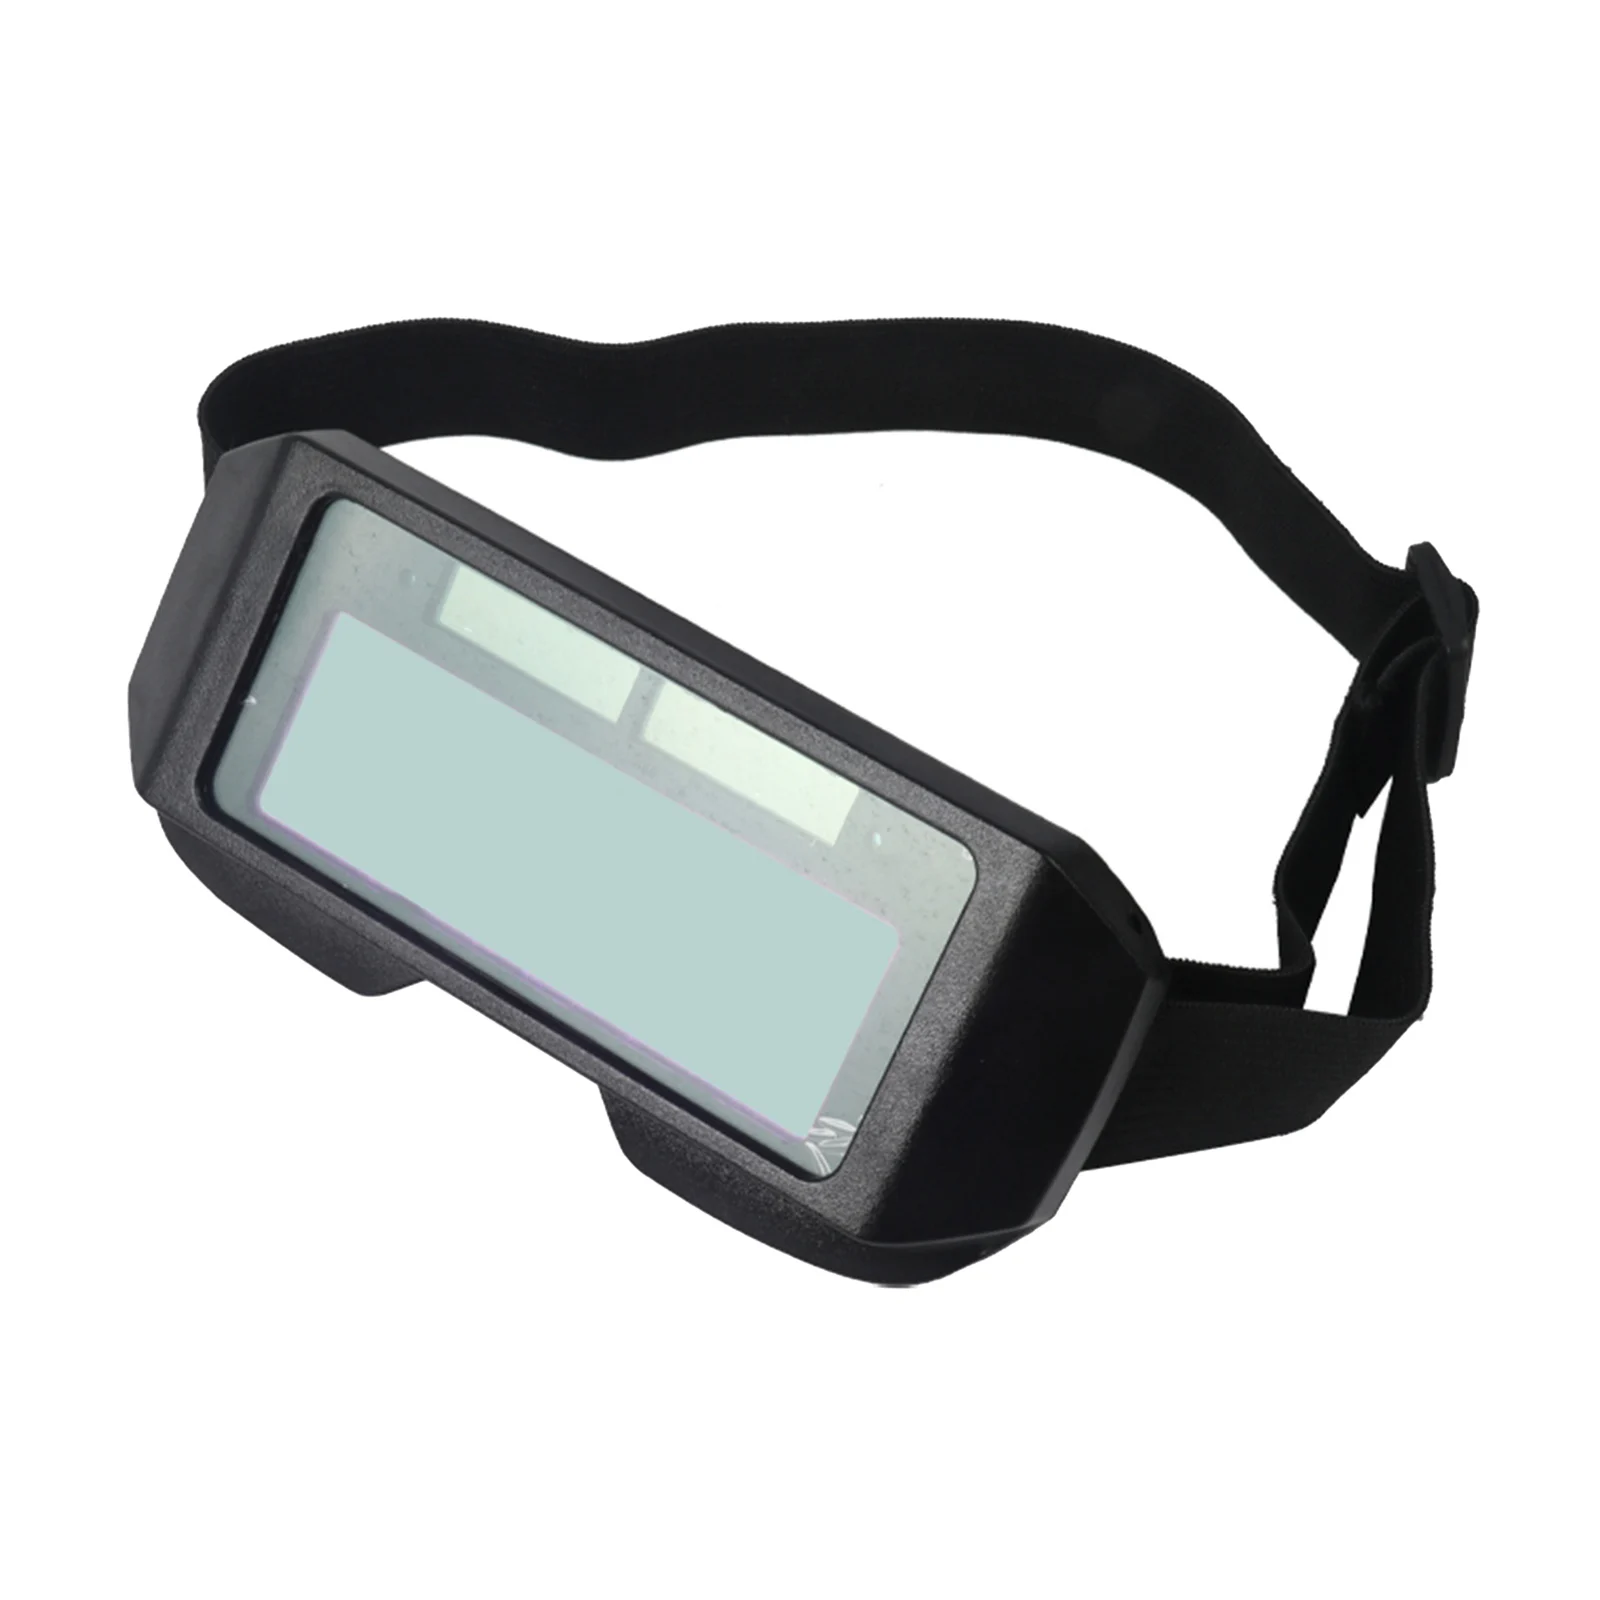 Auto Darkening Welding Goggles Protective Welder Helmet Anti-glare Black